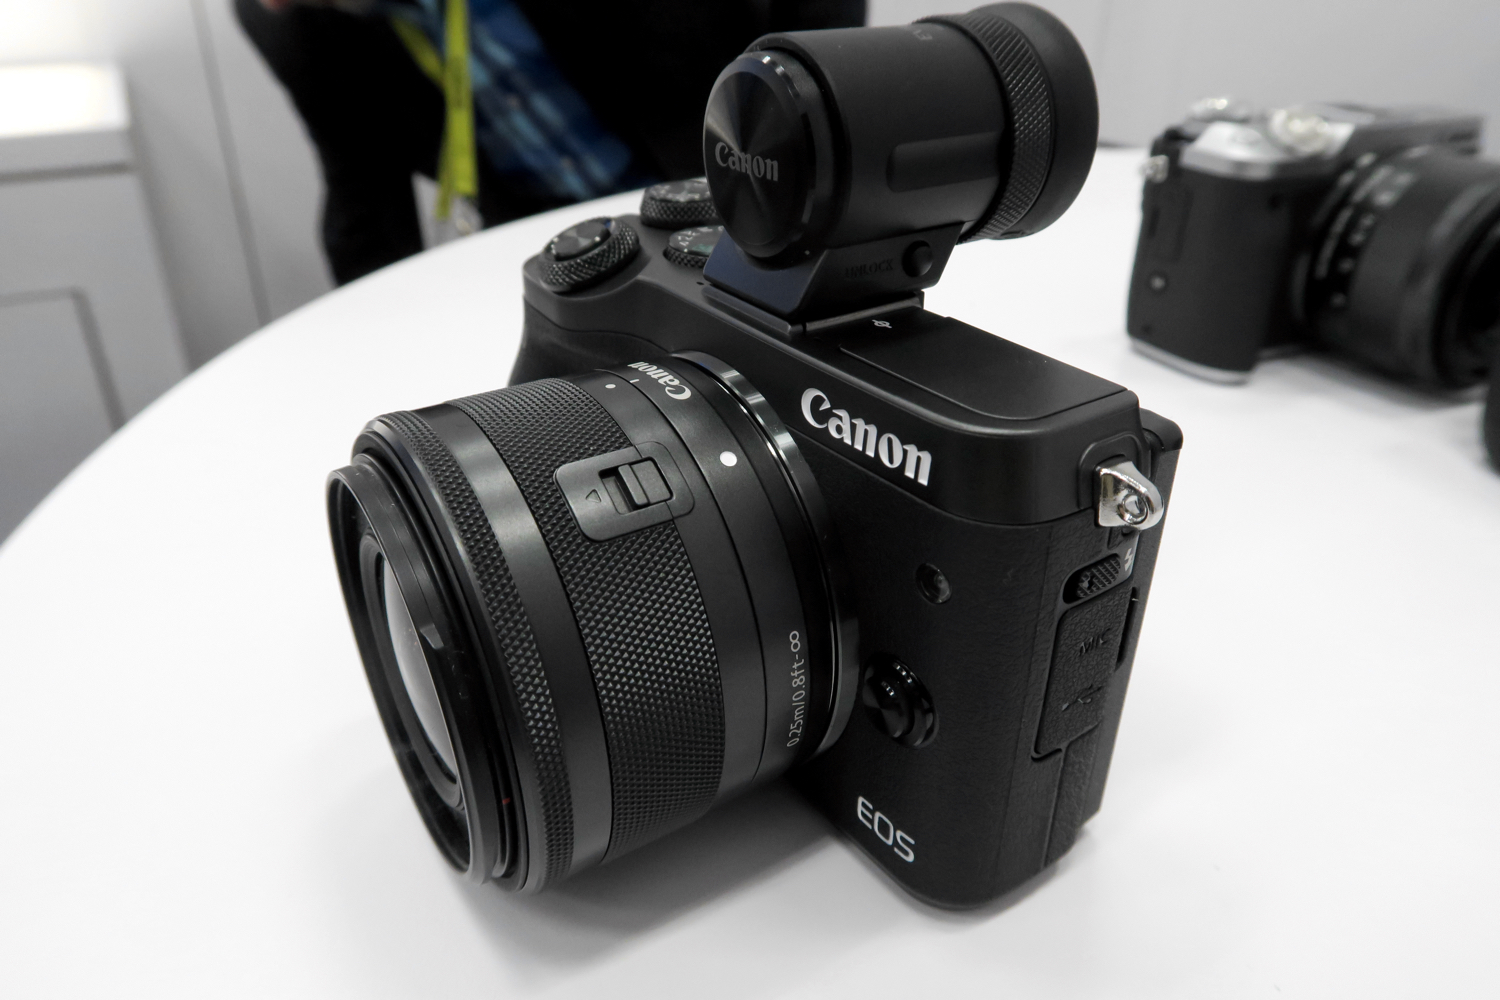 canon eos m6 announced cameras feb 2017 11